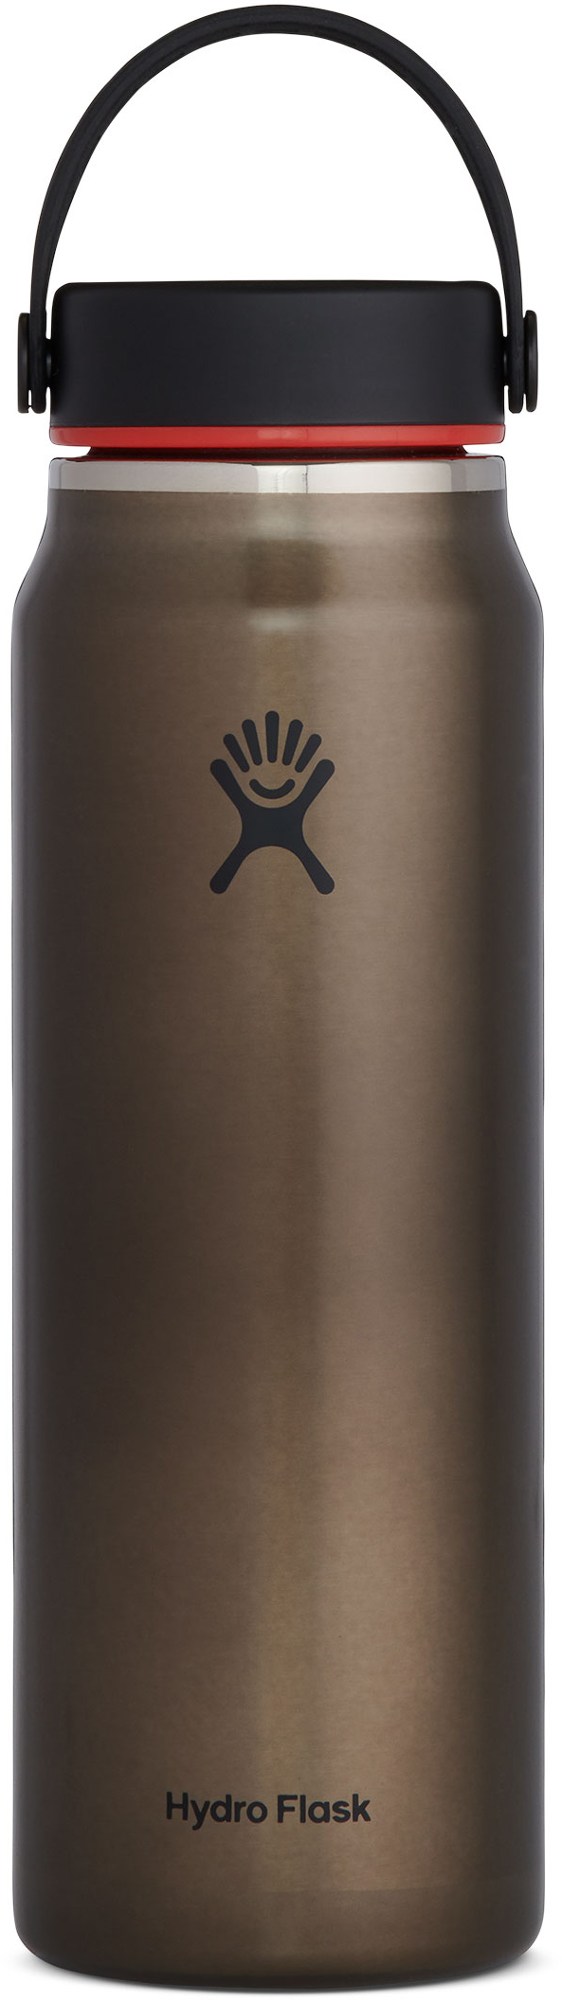 Легкая вакуумная бутылка для воды с широким горлышком — 32 эт. унция Hydro Flask, серый бутылка для воды ultrasoft flask